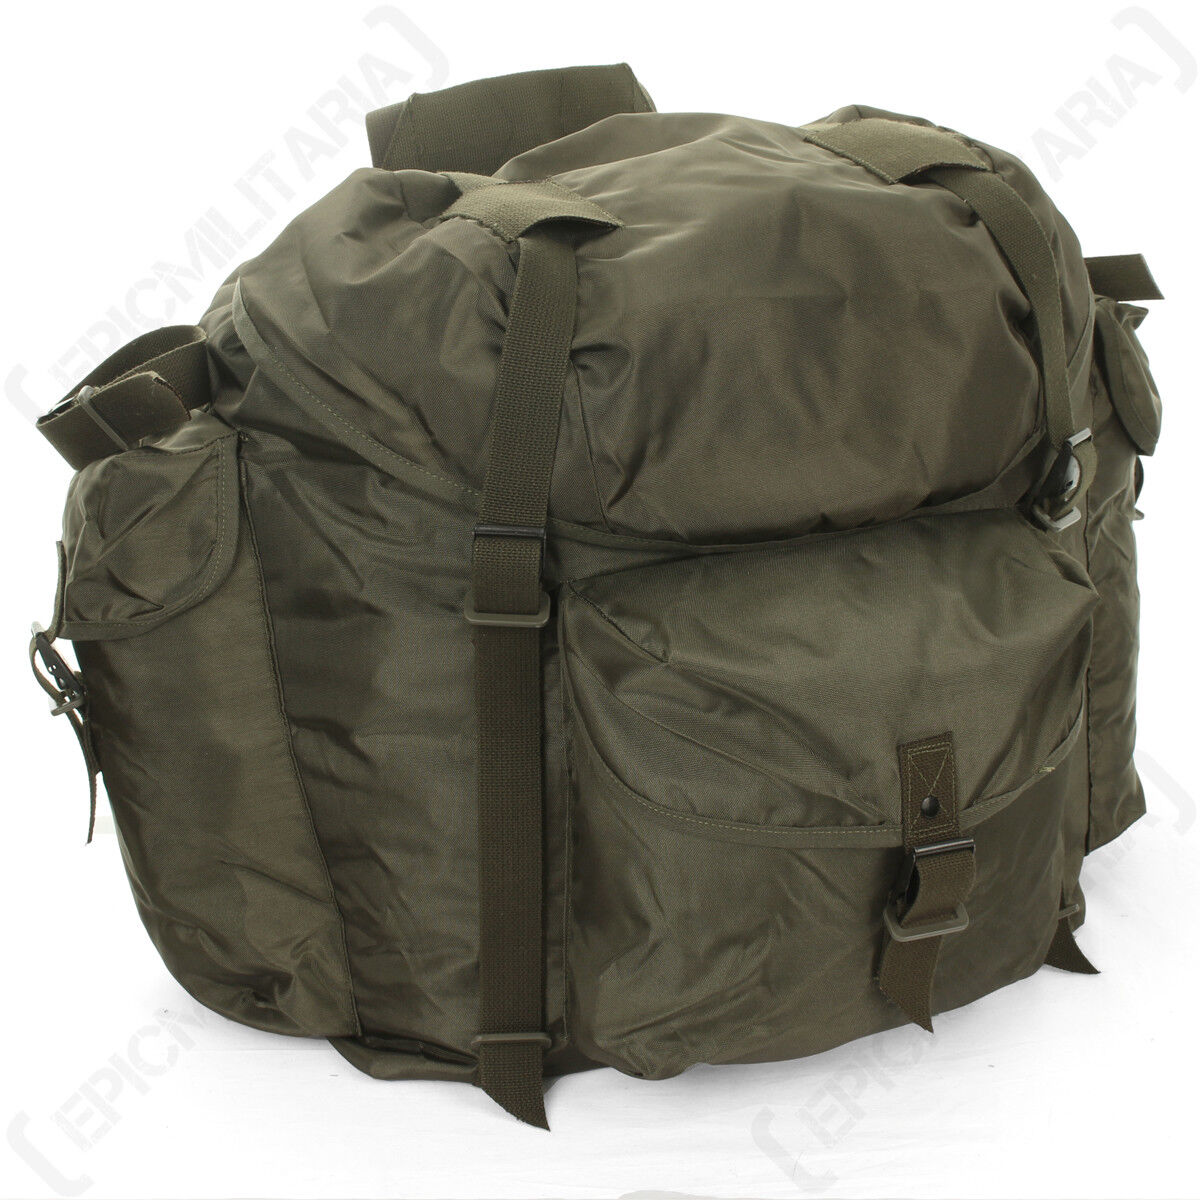 Original Austrian Olive Drab Rucksack - Army Surplus Backpack Bag Military Green